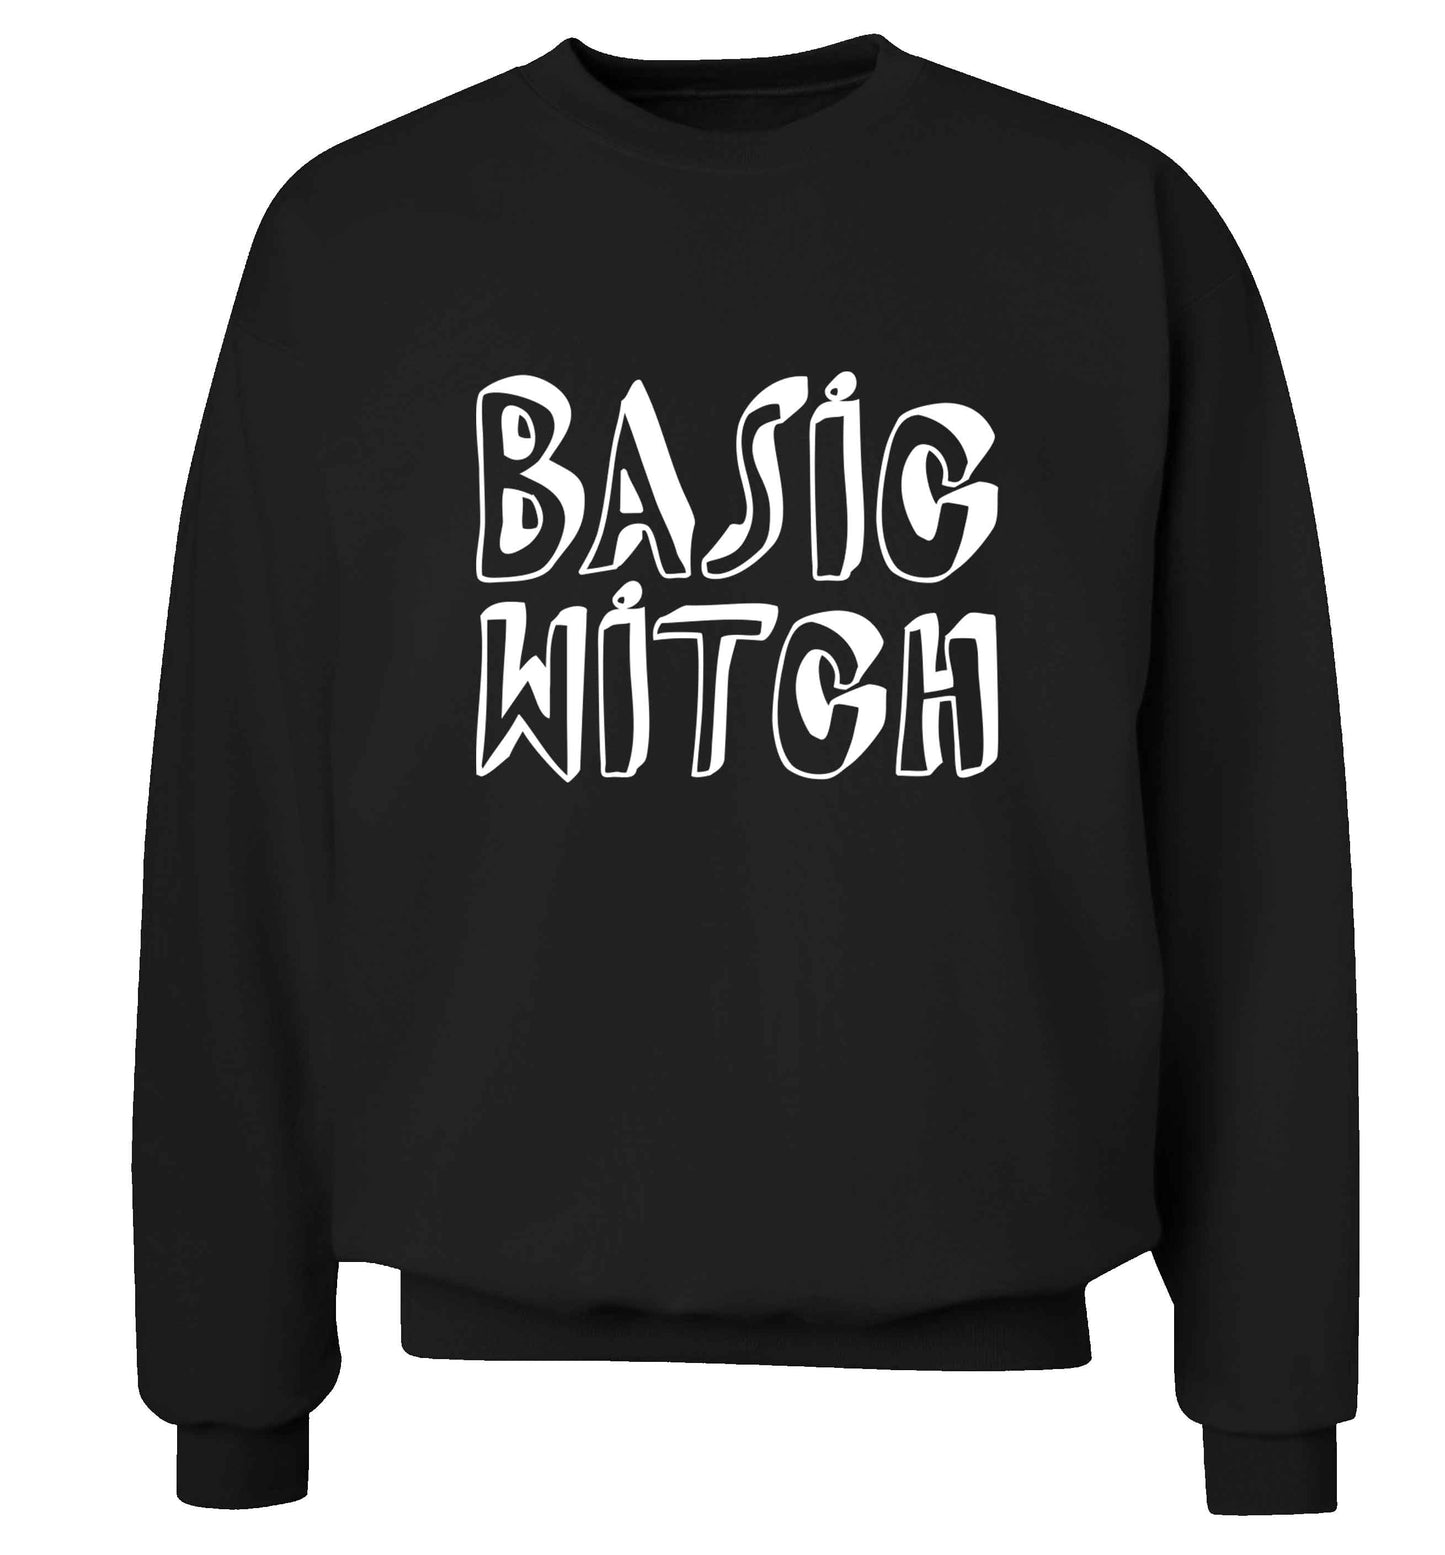 Basic witch adult's unisex black sweater 2XL